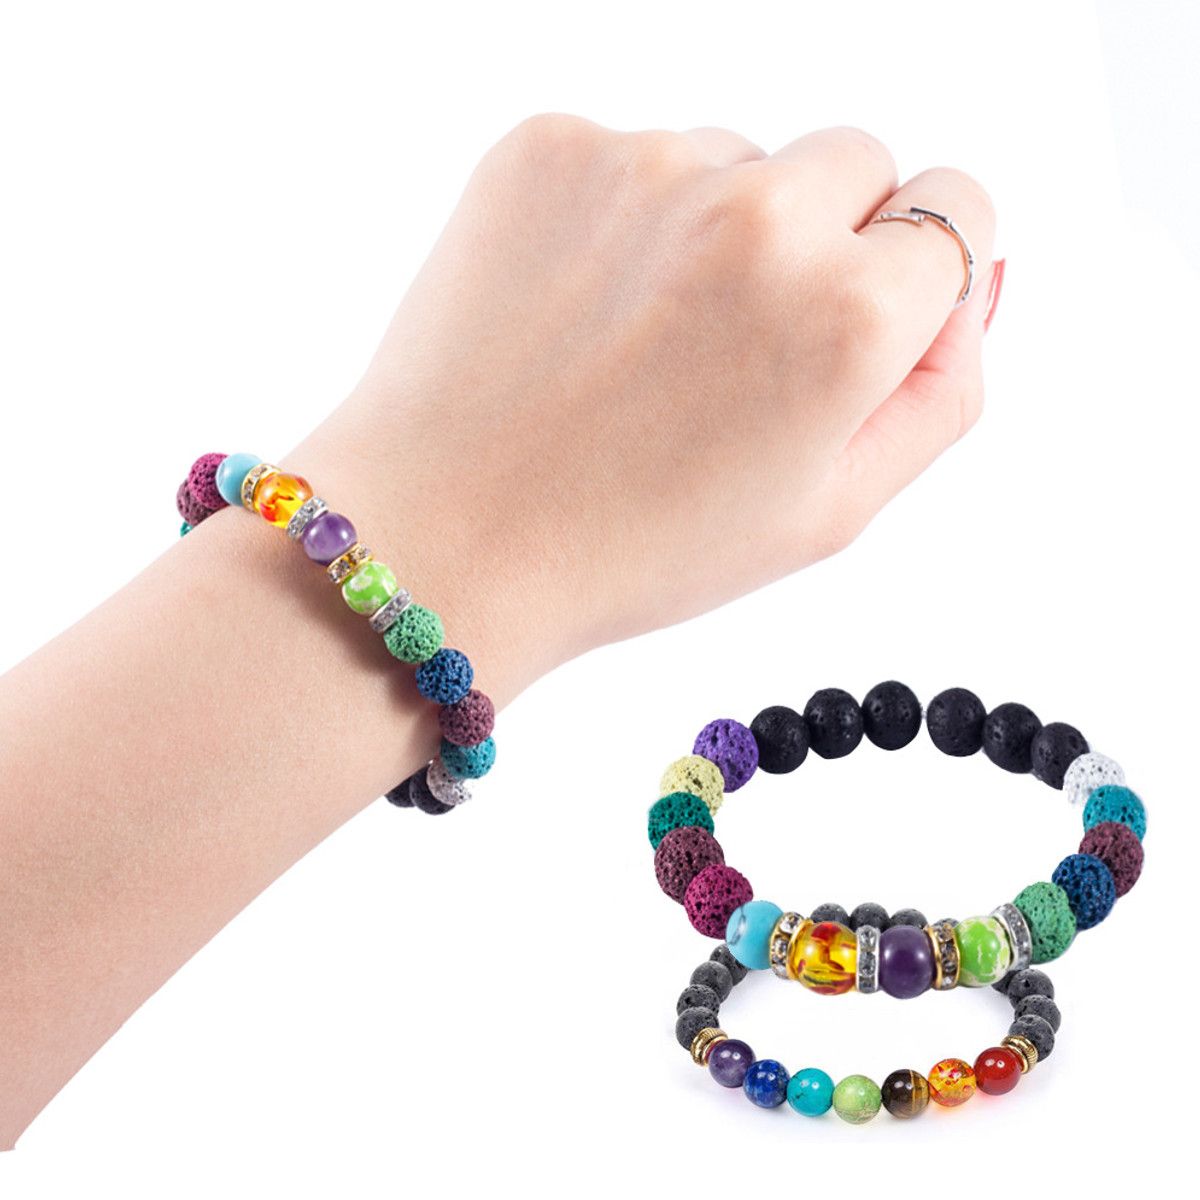 600Pcs-Children-Girls-Kid-DIY-Necklace-Bracelet-Make-Beads-Jewellery-Making-Set-1690990